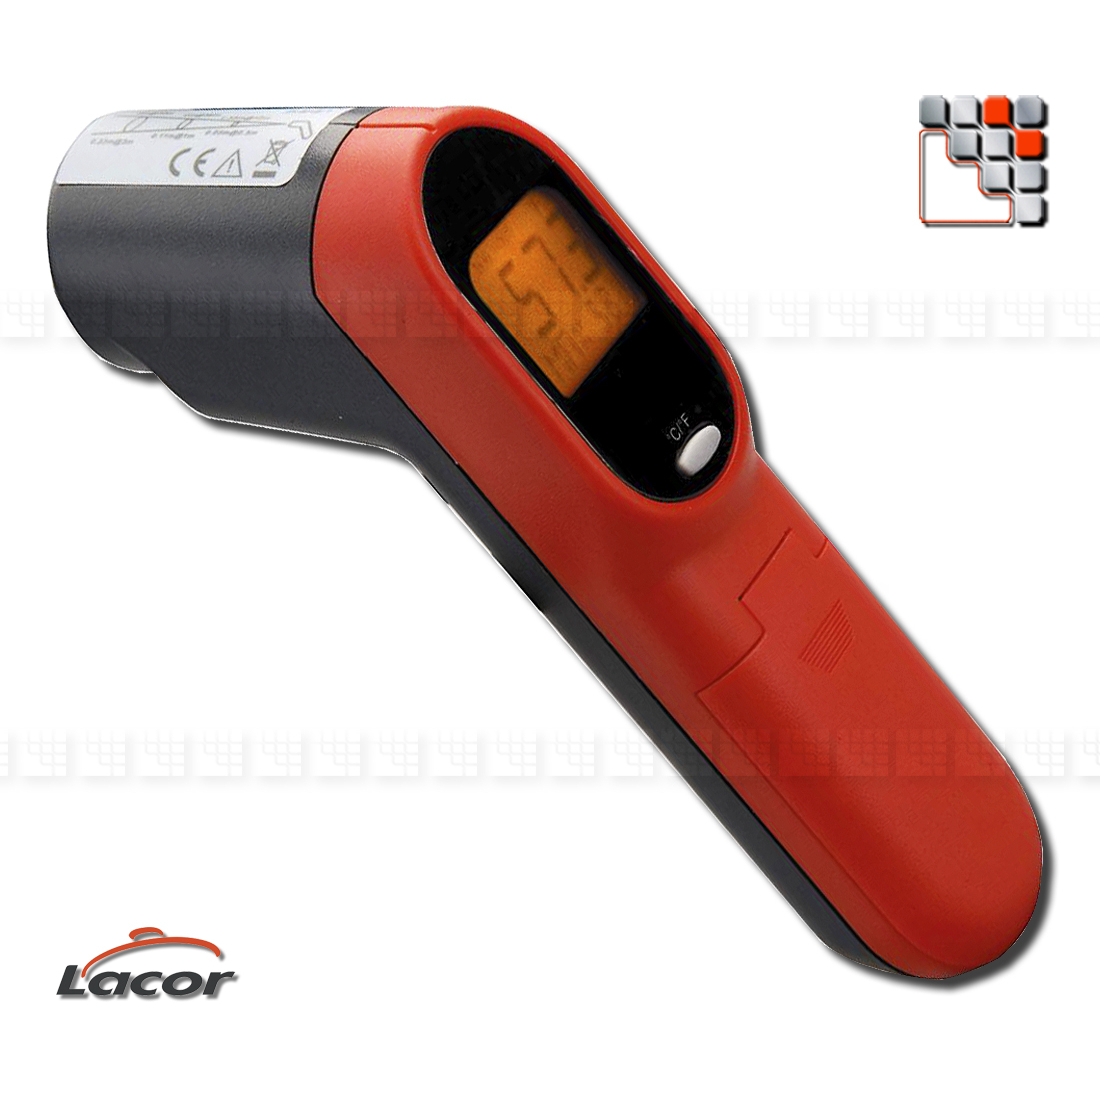 https://www.carrement-plancha.com/6685-large_default/thermometre-infrarouge-visee-laser-lacor.jpg